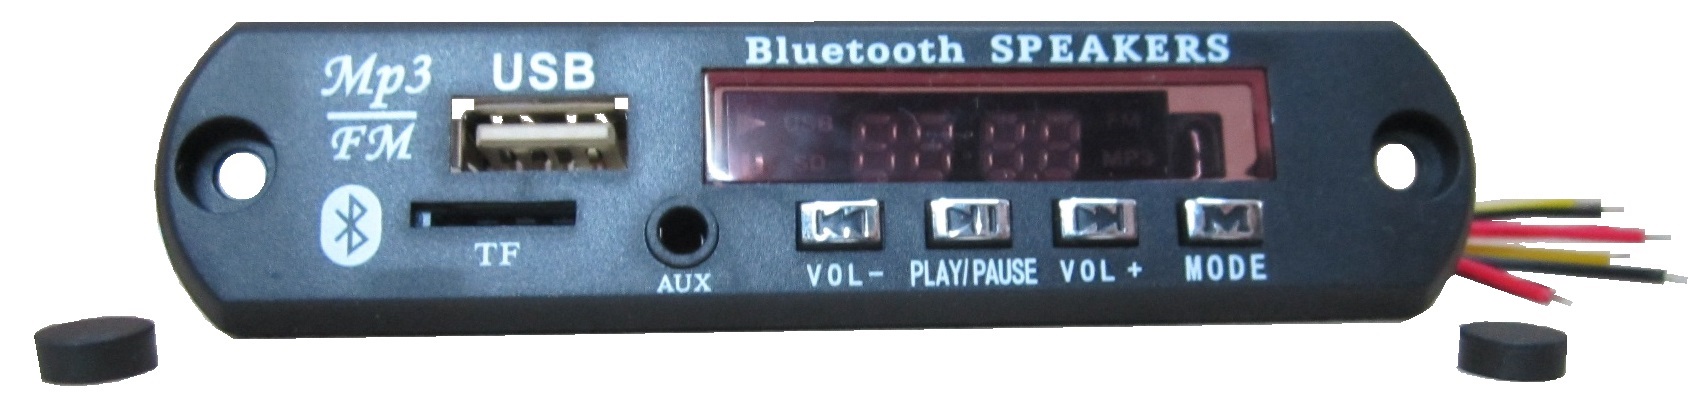 Внешний вид Bluetooth Speaker 